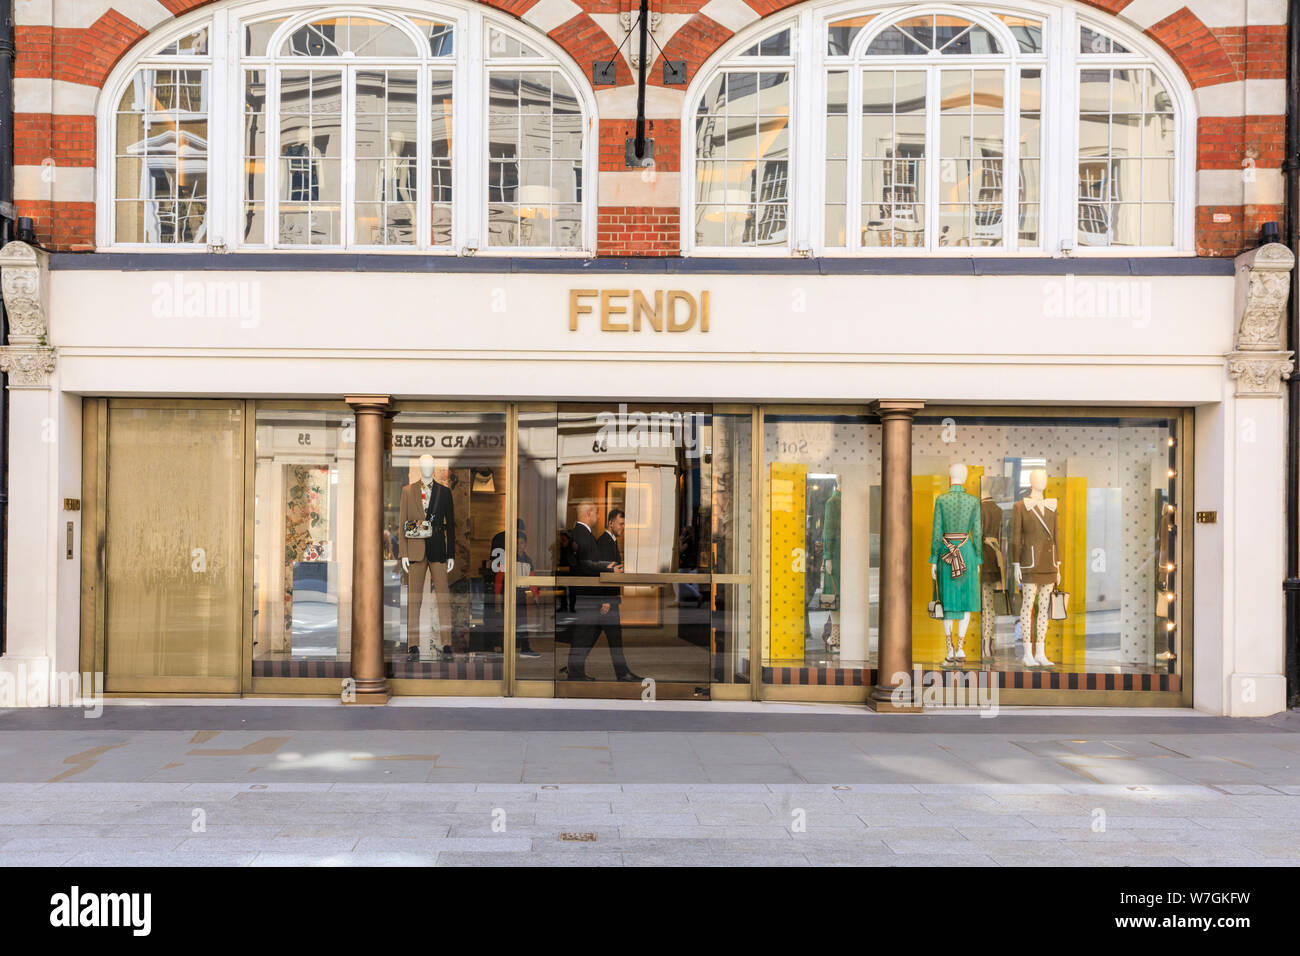 Fendi Italian brand fashion and retail store, shop exterior in New Bond ...